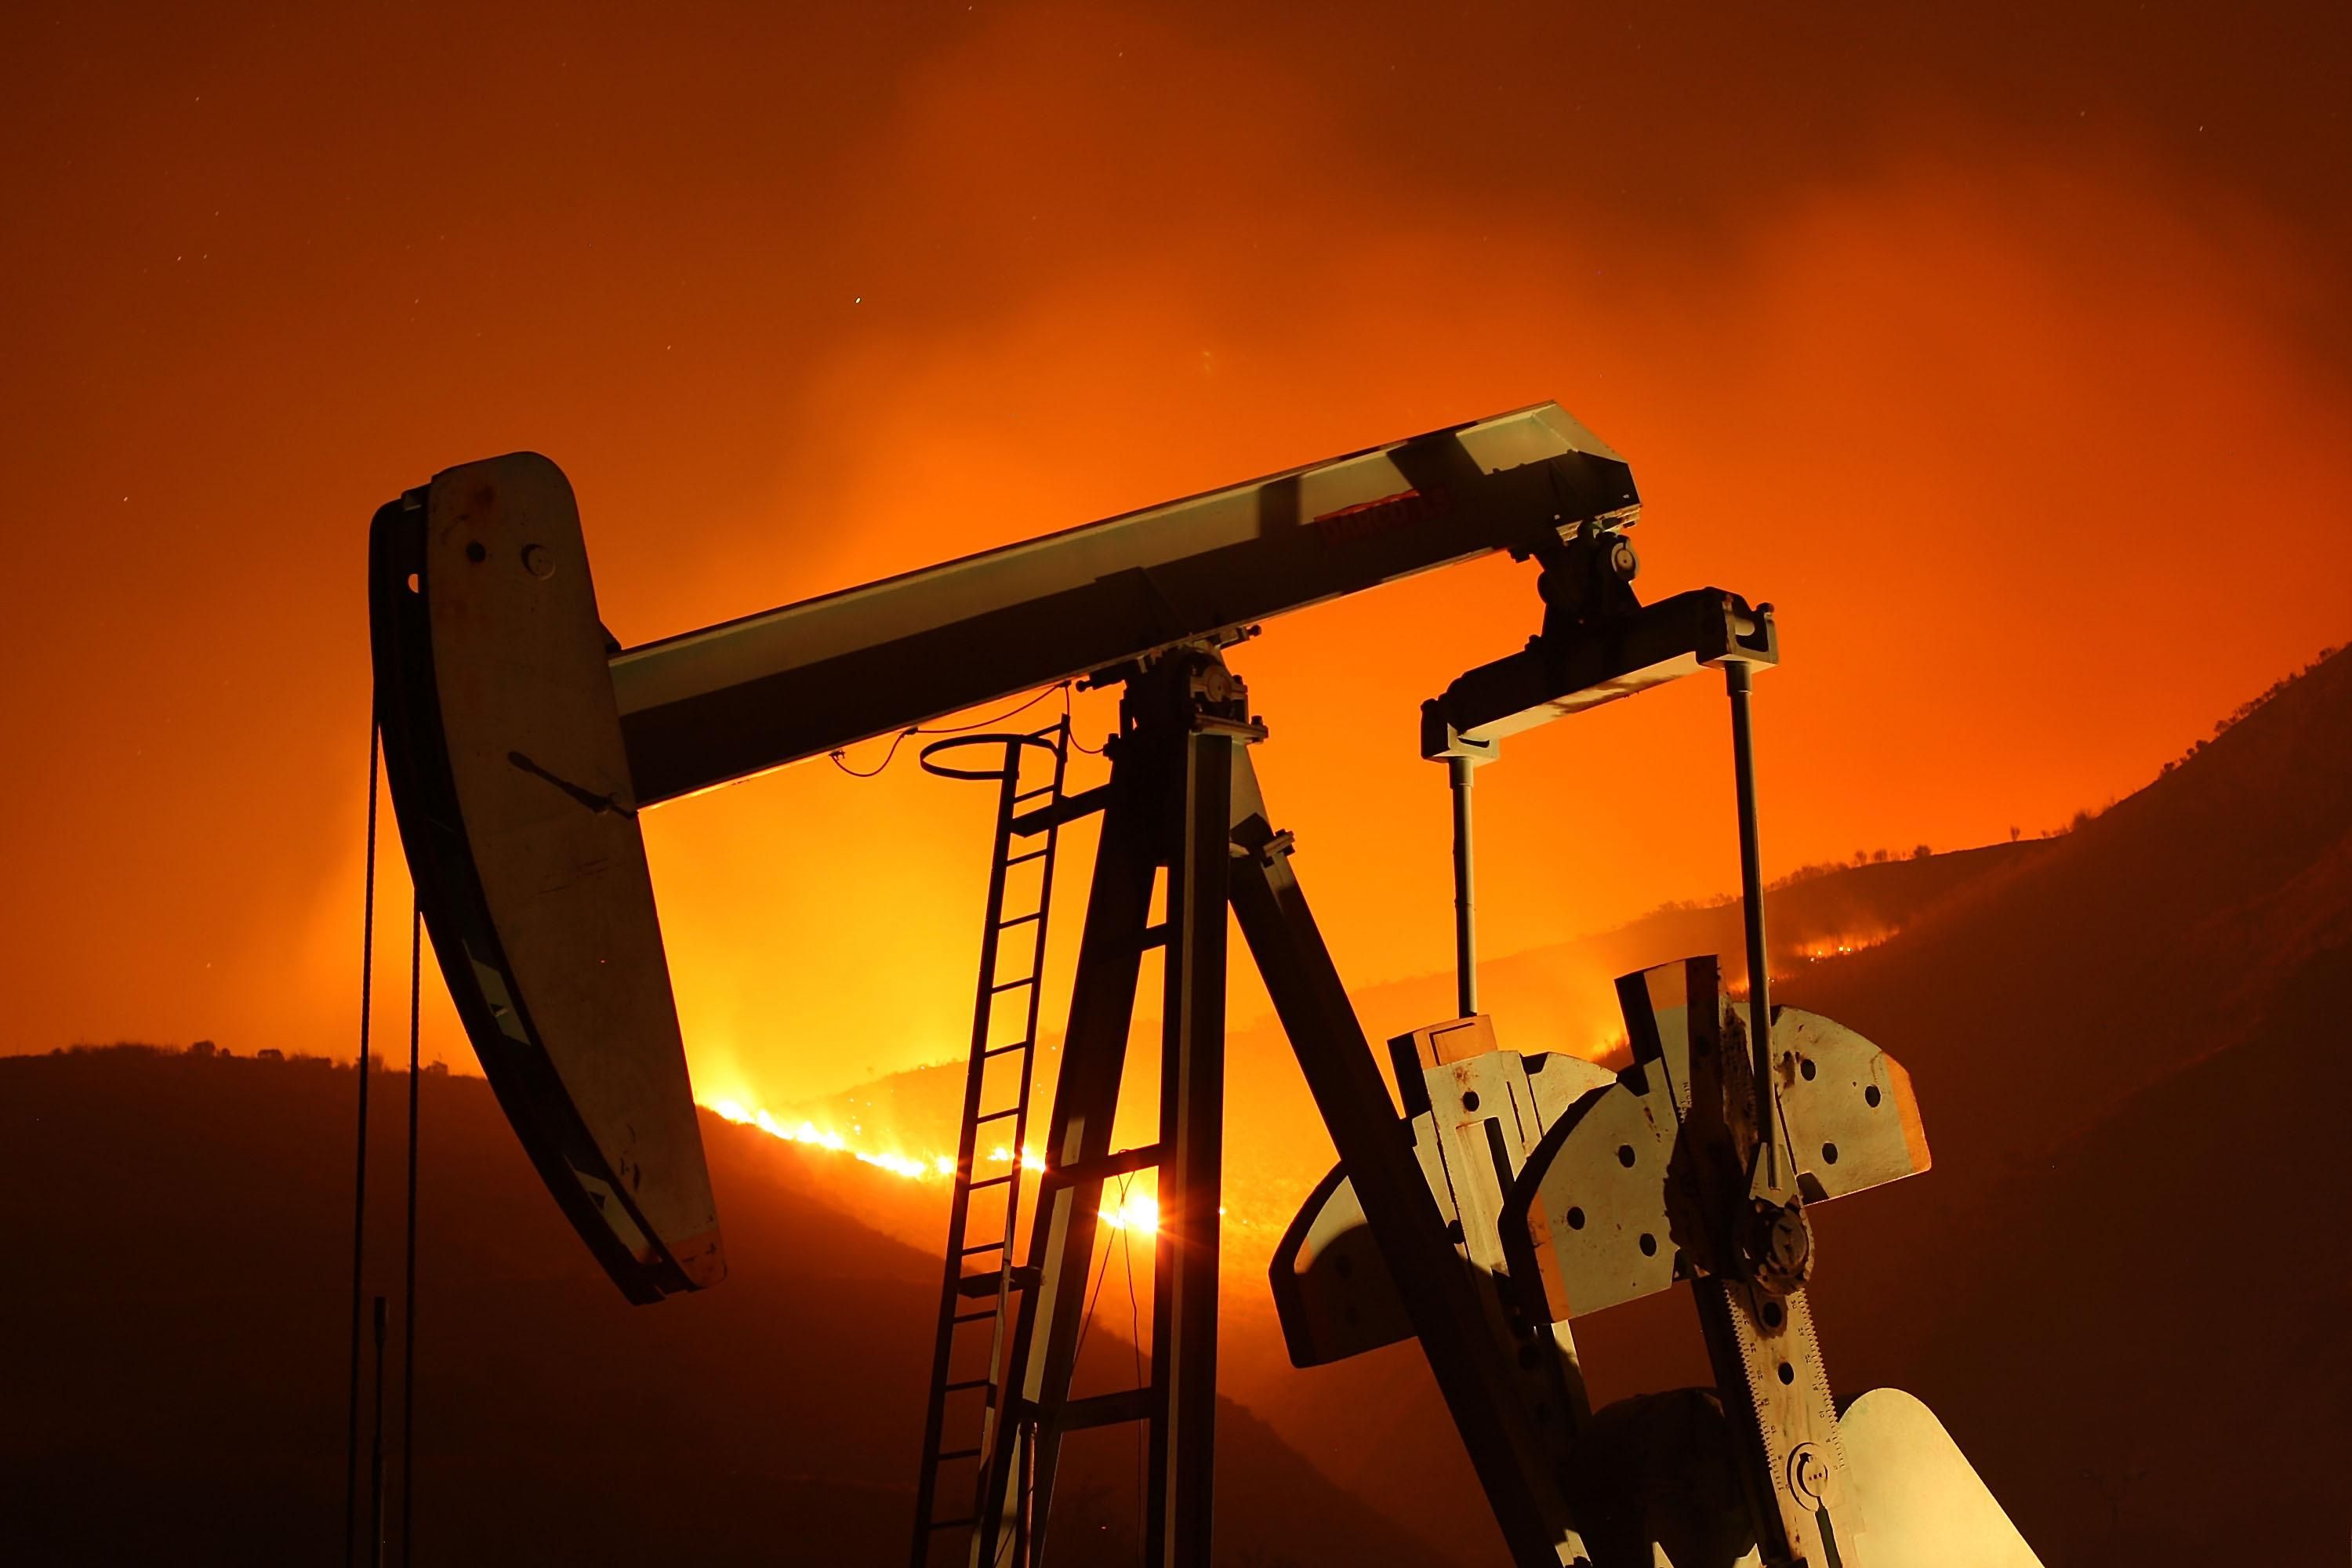 oil development and fire in california